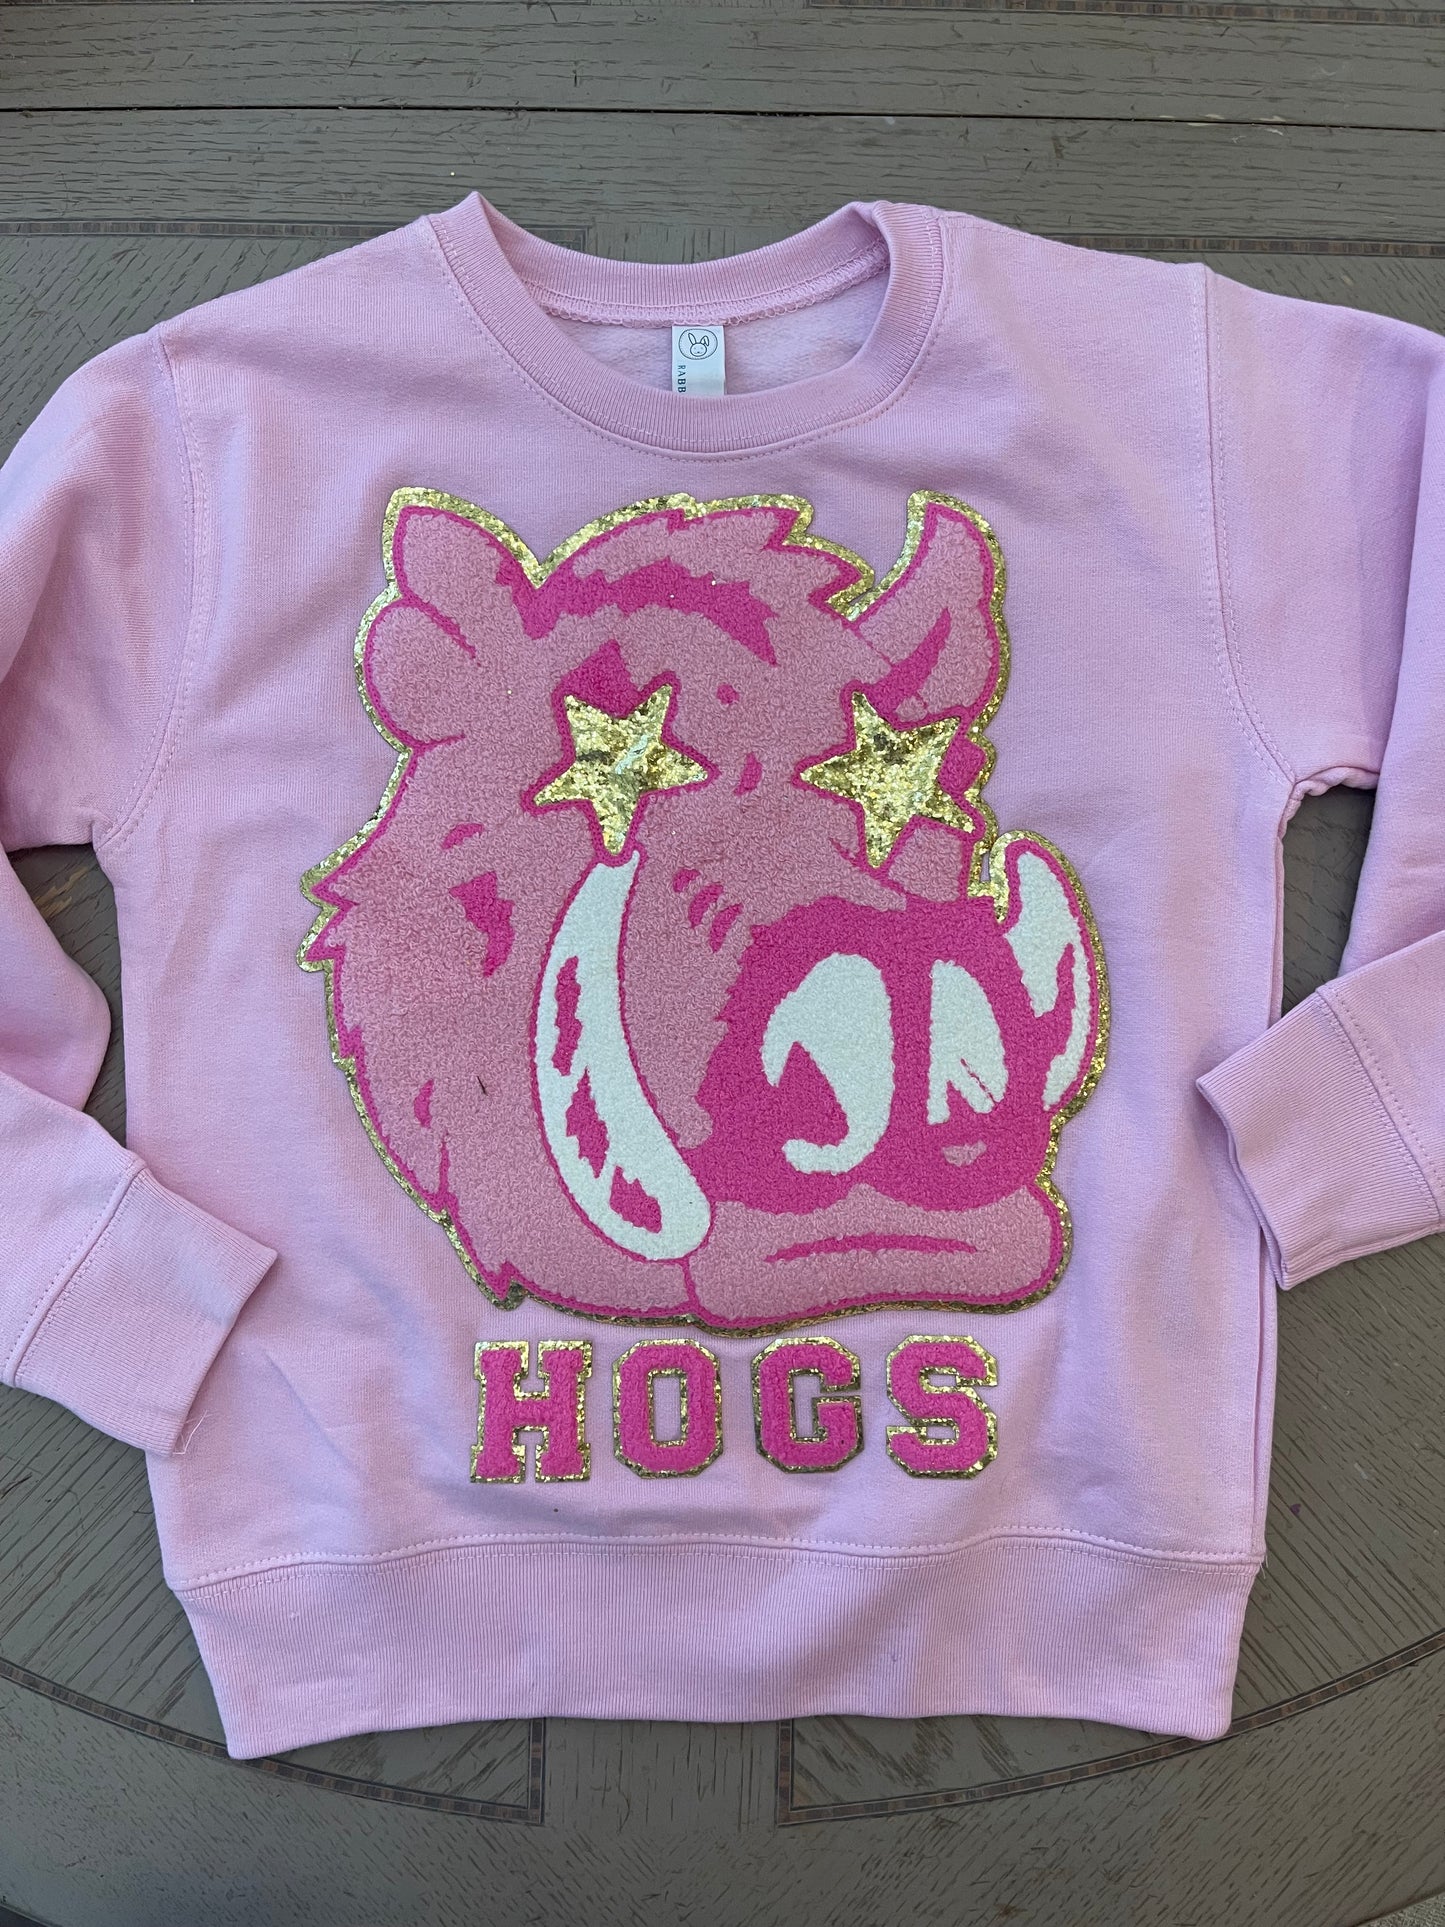 Toddler/Youth Groovy Hog Patch sweatshirt